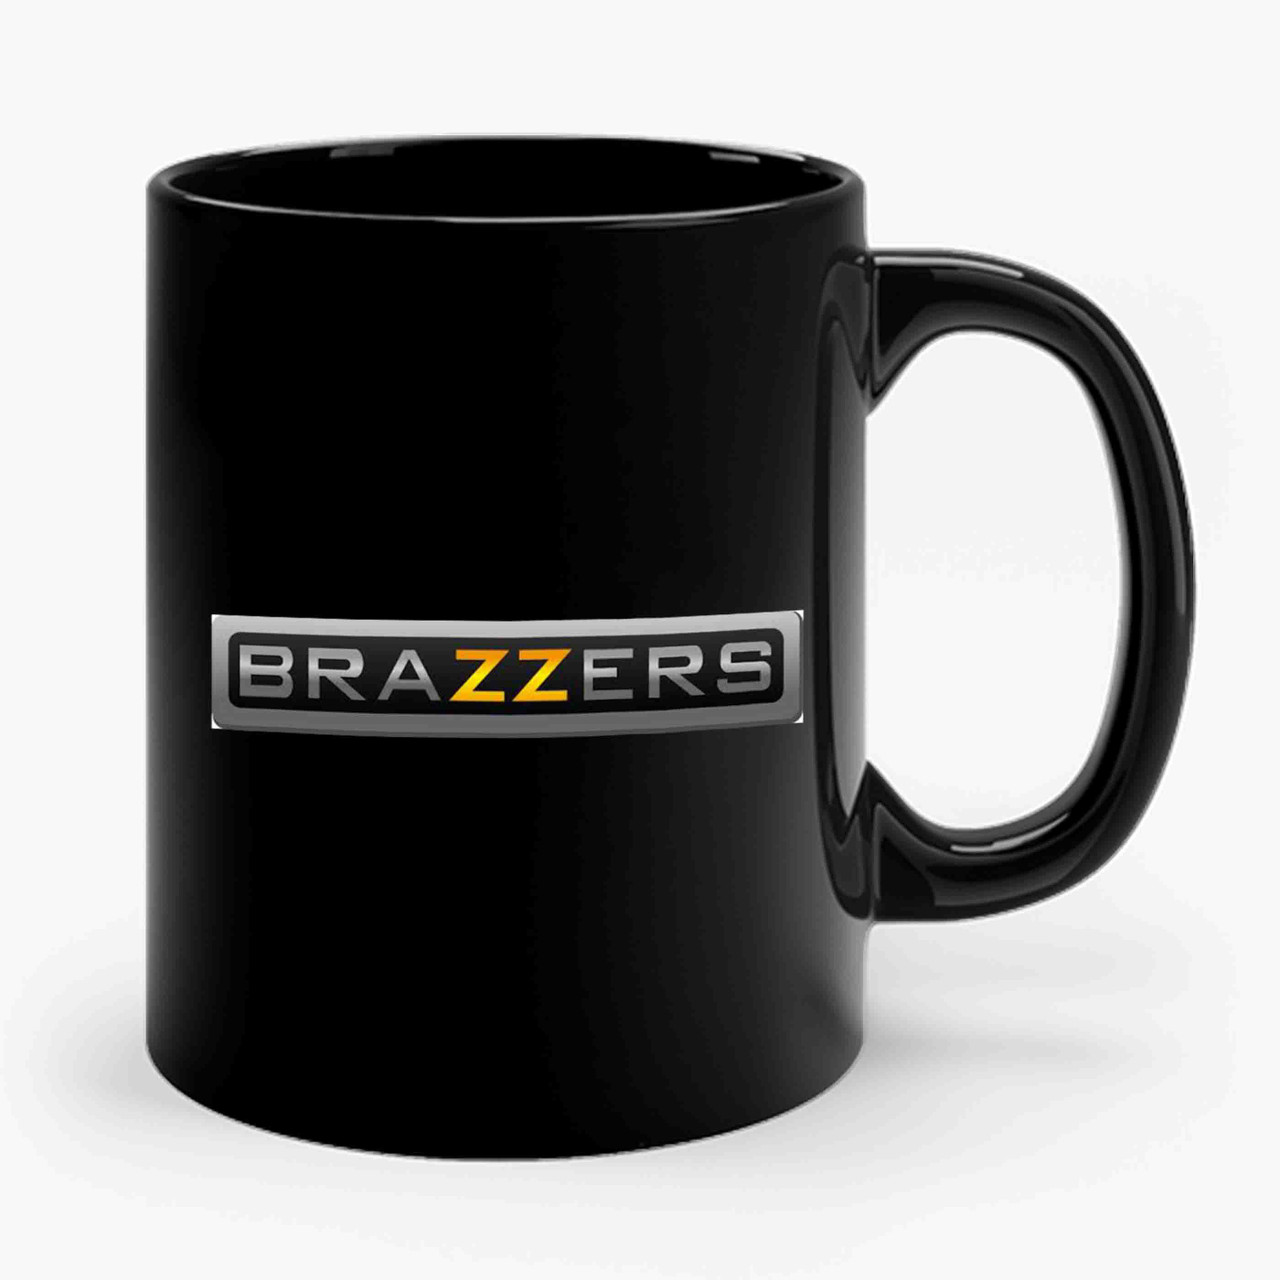 Brazzraes Com - Brazzers Funny Cool Porn Industry Ceramic Mug